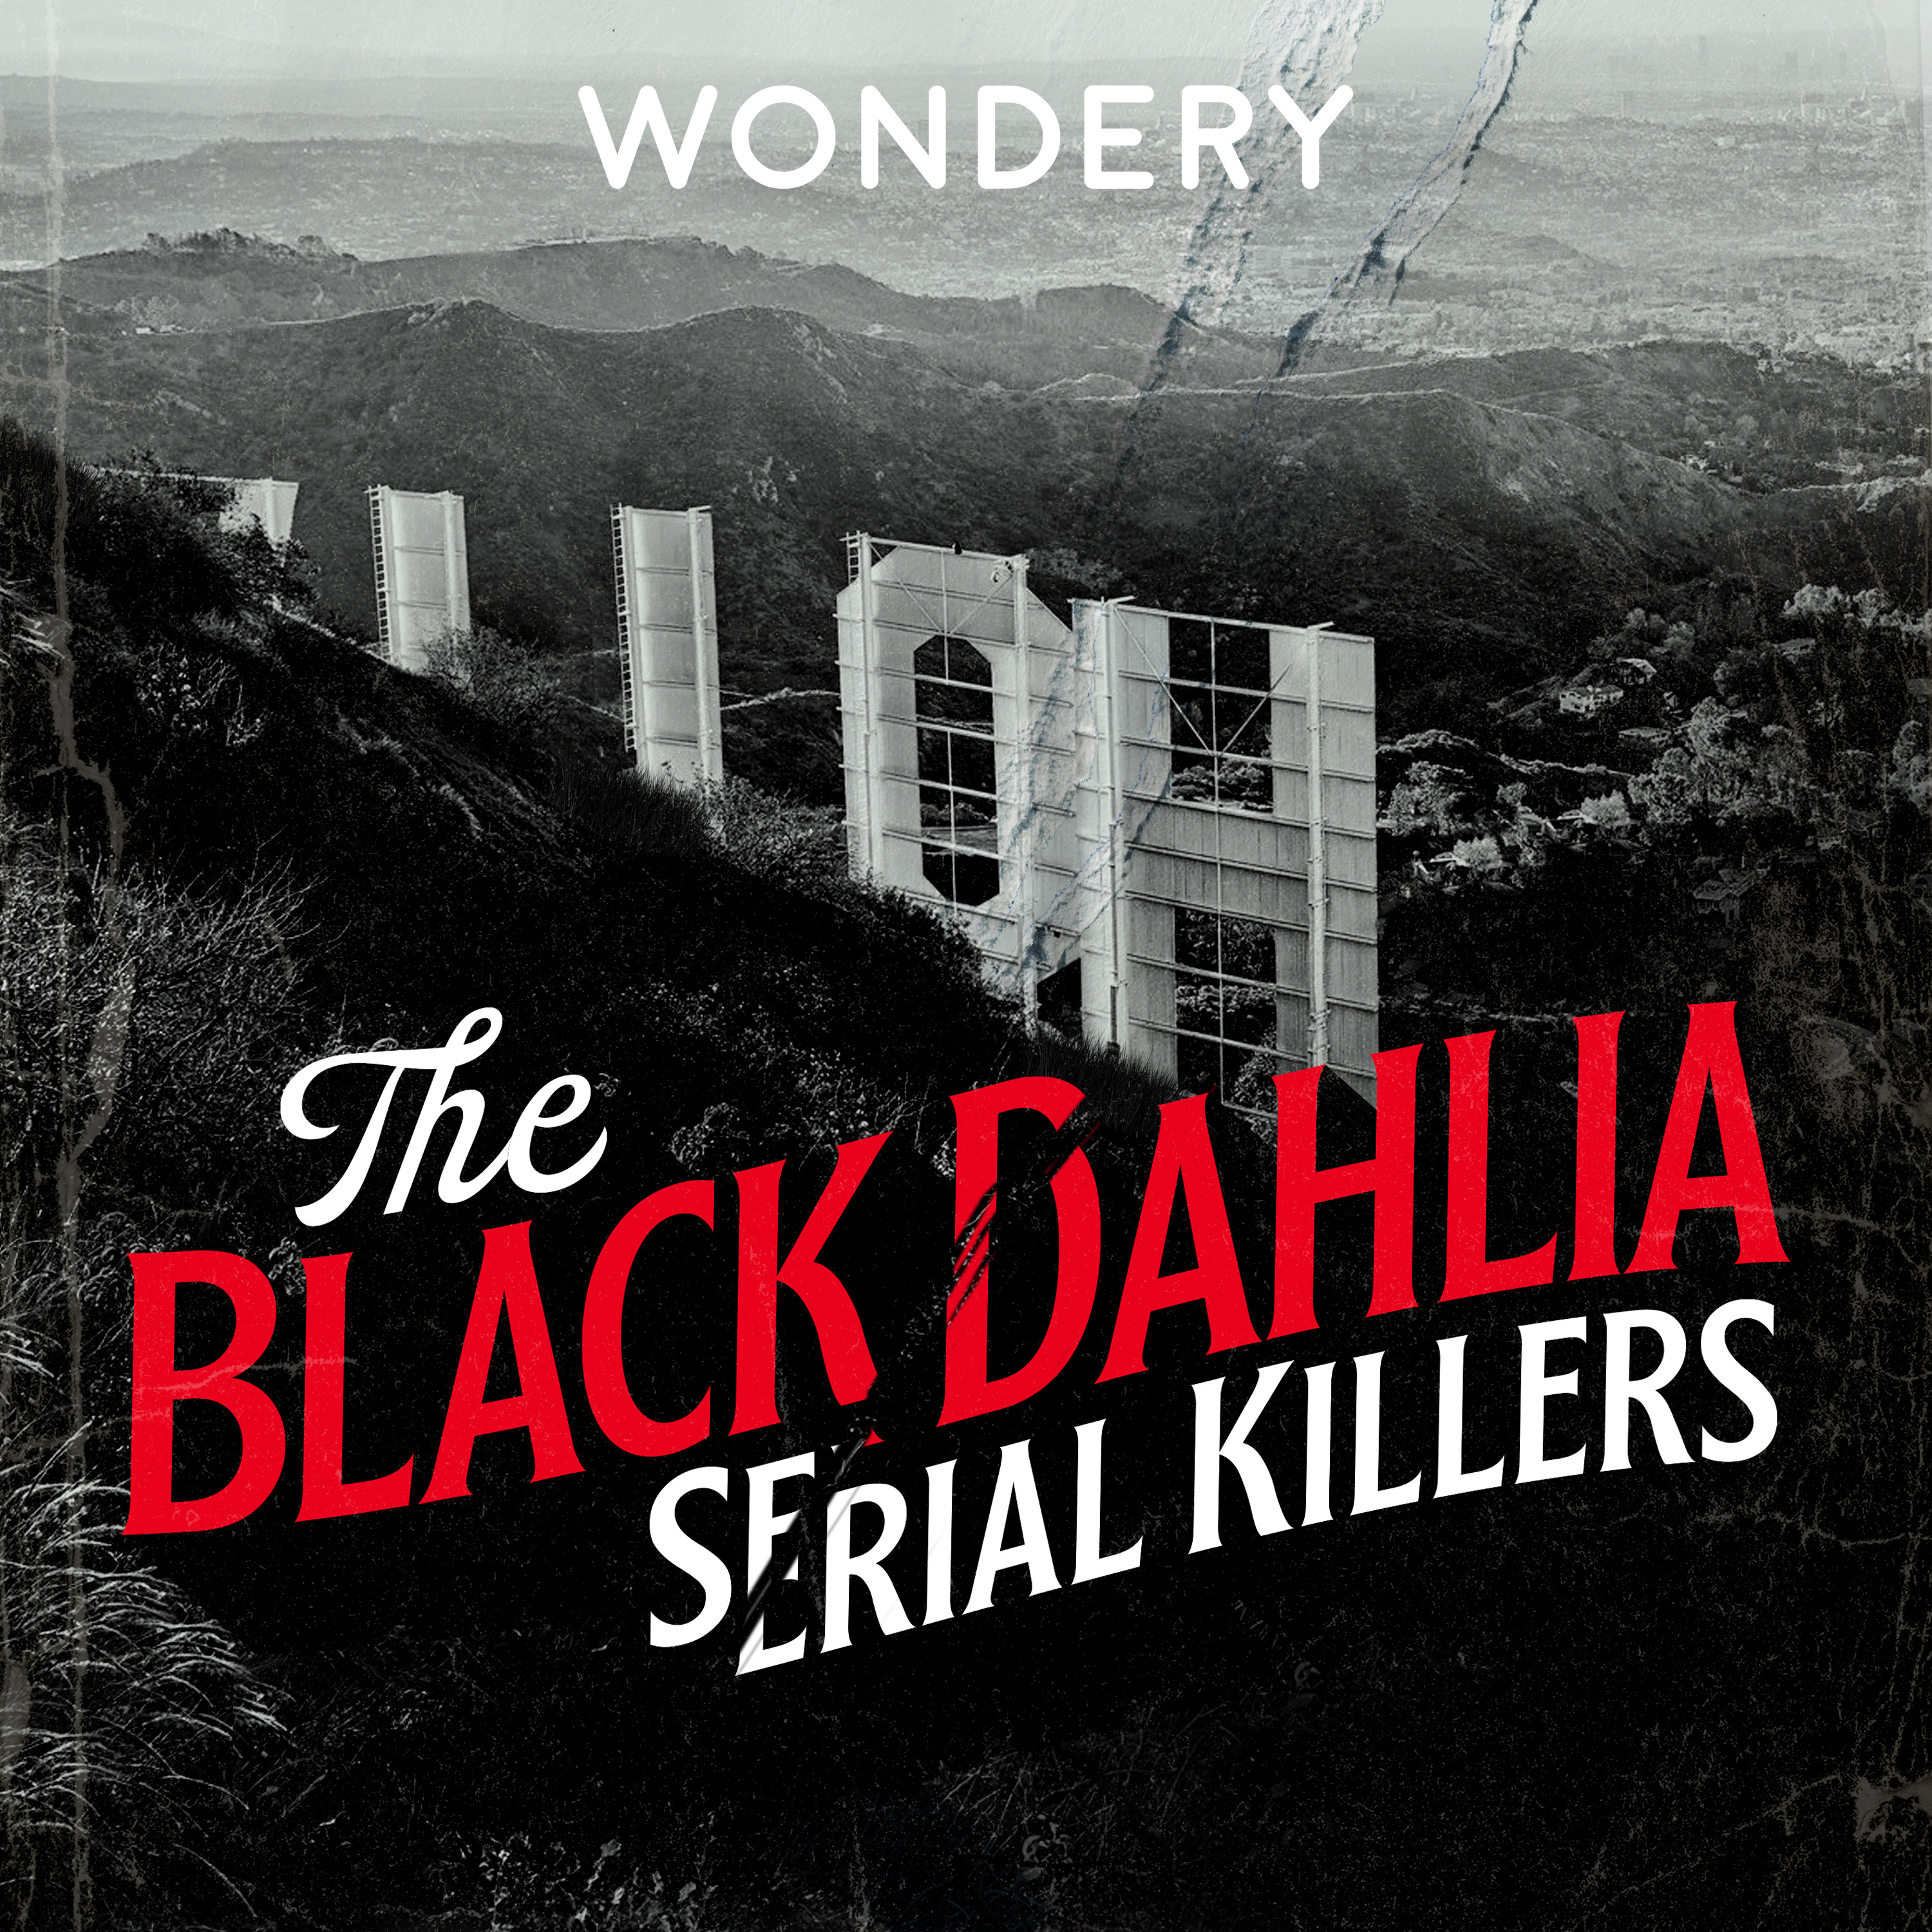 Introducing: The Black Dahlia Serial Killers